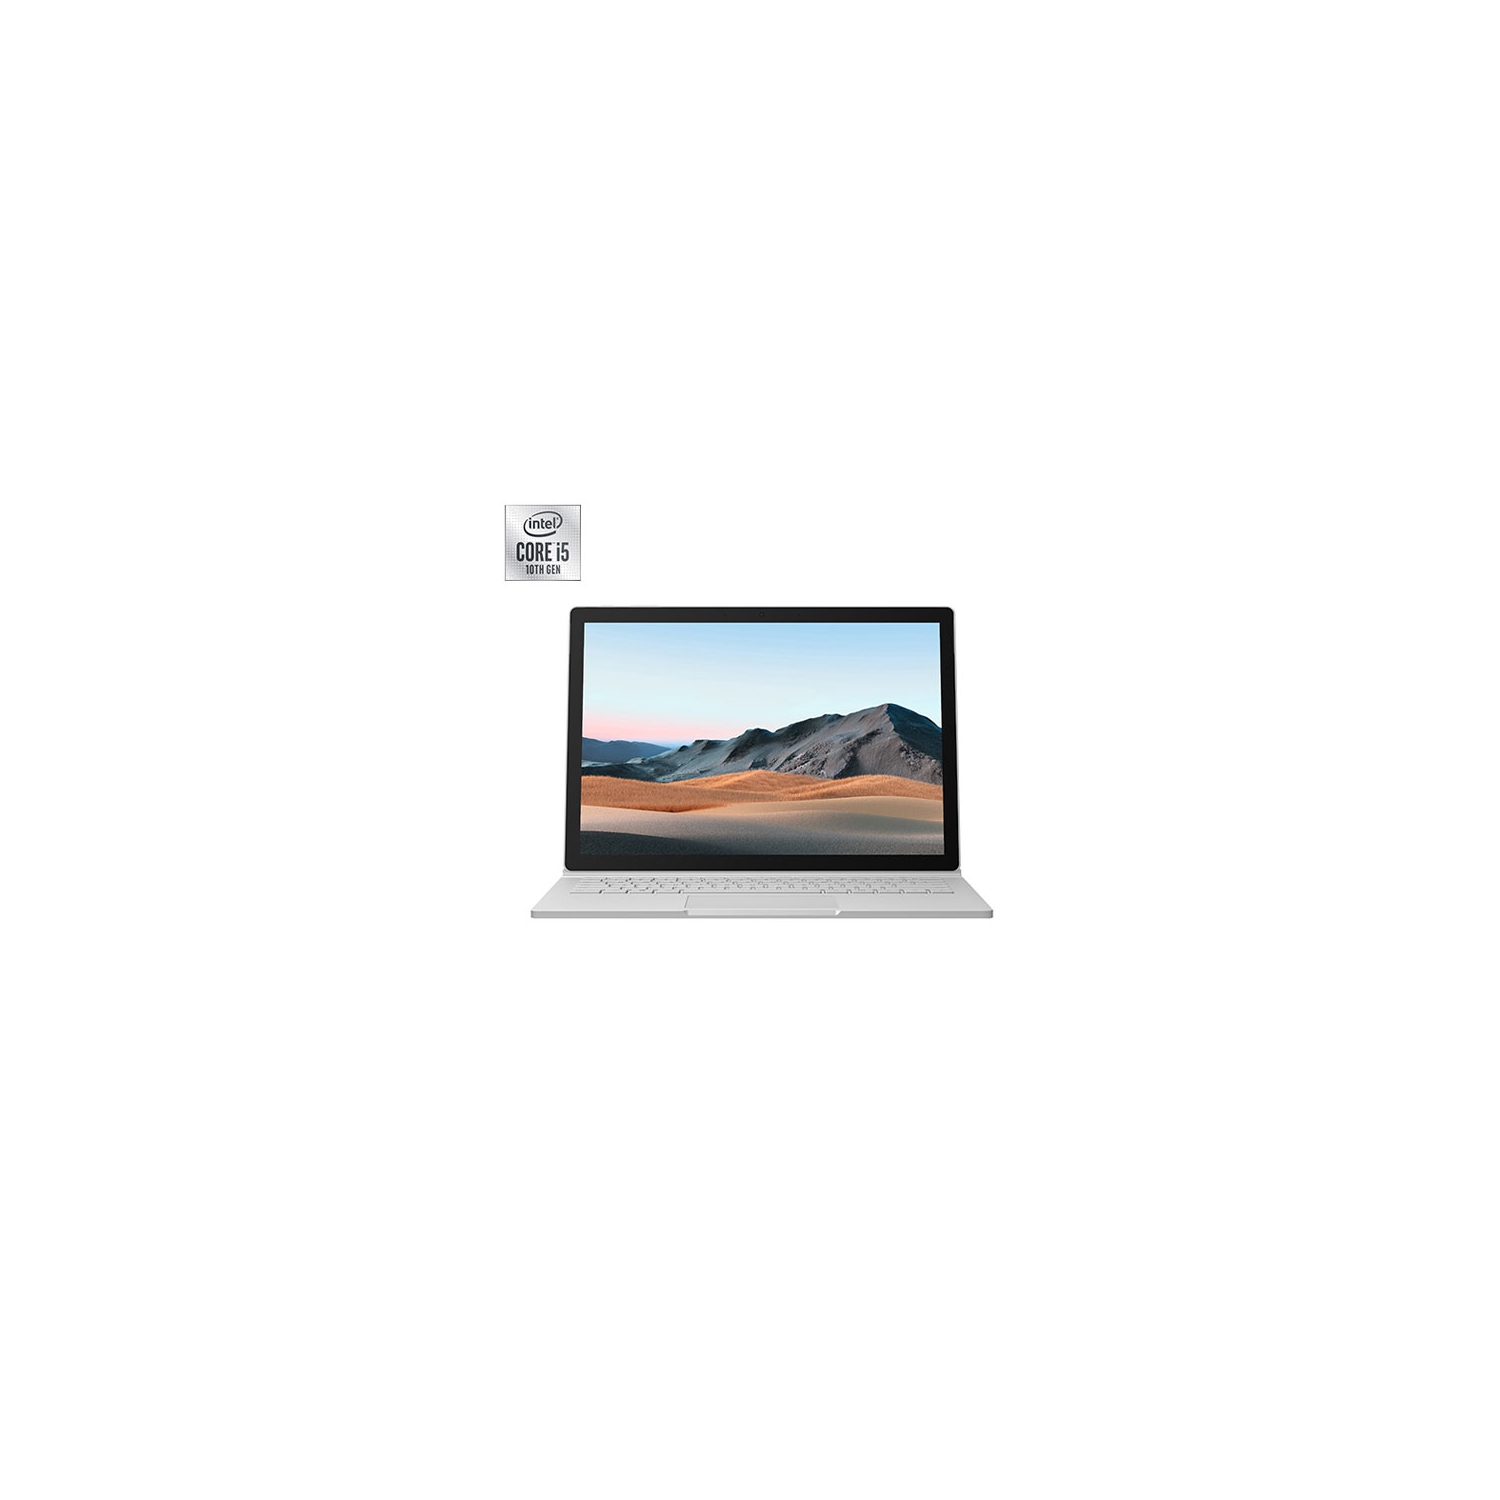 Refurbished (Good) - Microsoft Surface Book 3 13.5" 2-in-1 Laptop - Platinum (Intel Ci5-1035G7/256GB SSD/8GB RAM) - French